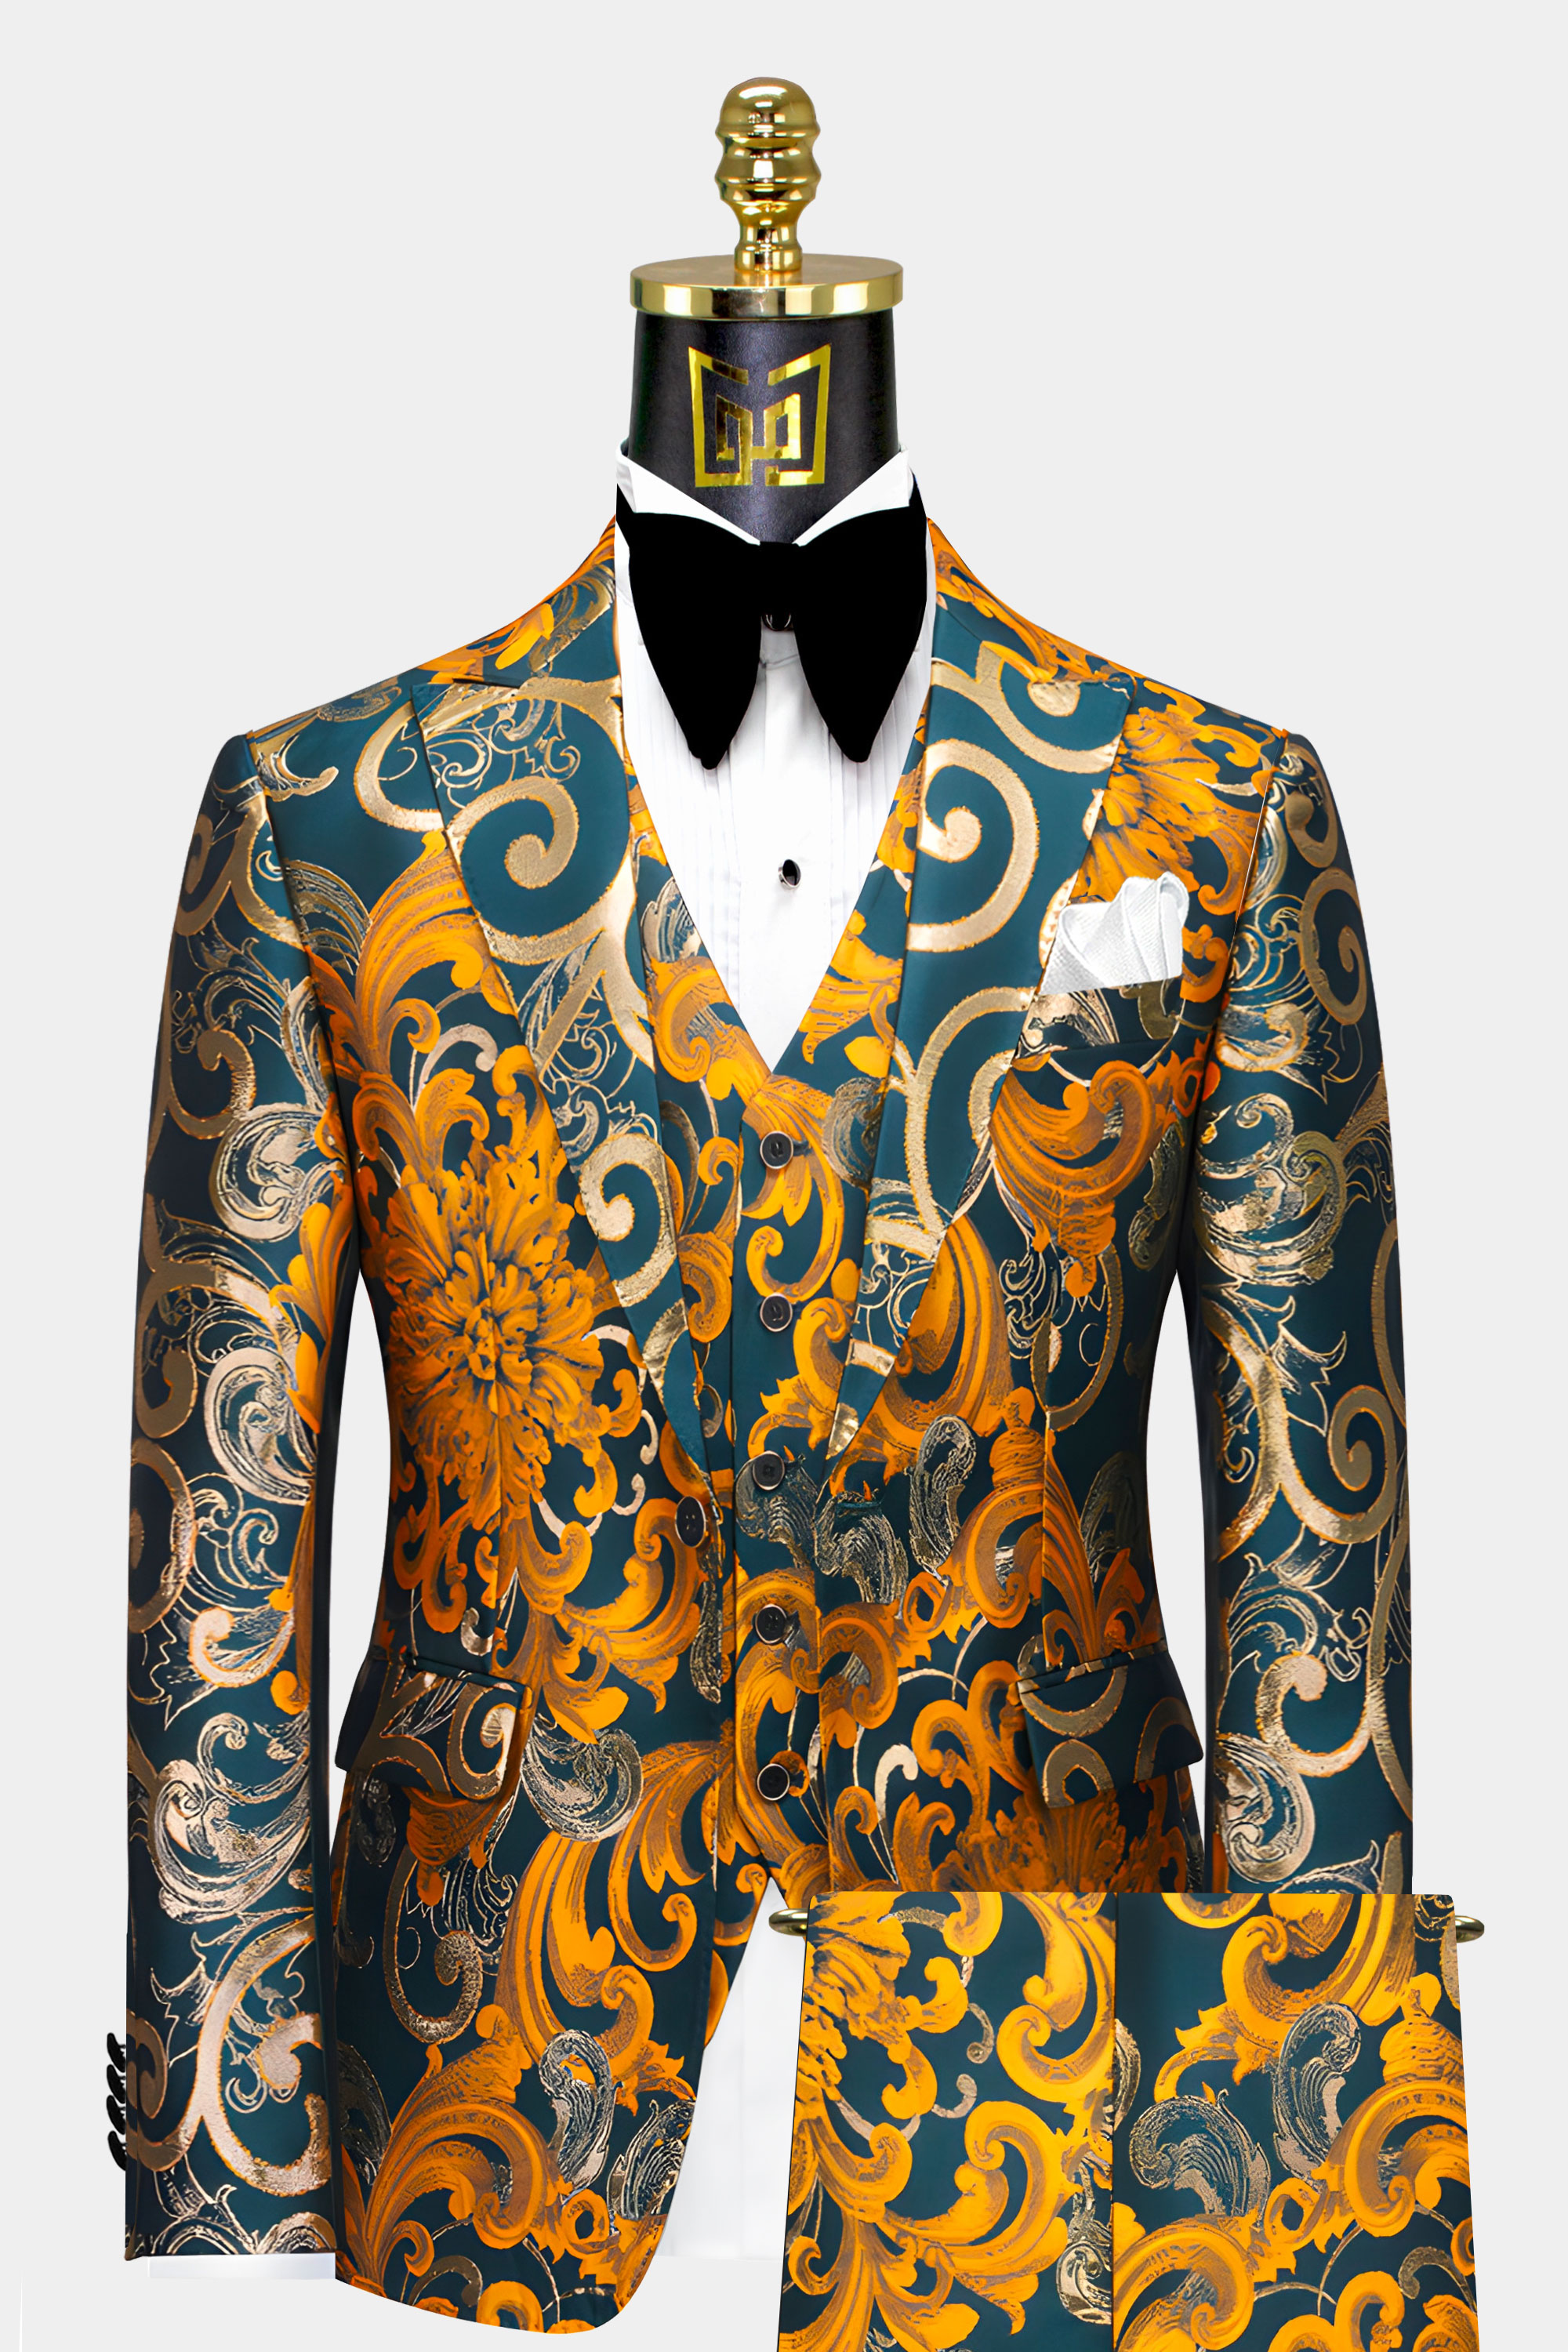 Mens-Gold-Floral-Suit-Teal-Groom-Wedding-Prom-Tuxedo-from-Gentlemansguru.com